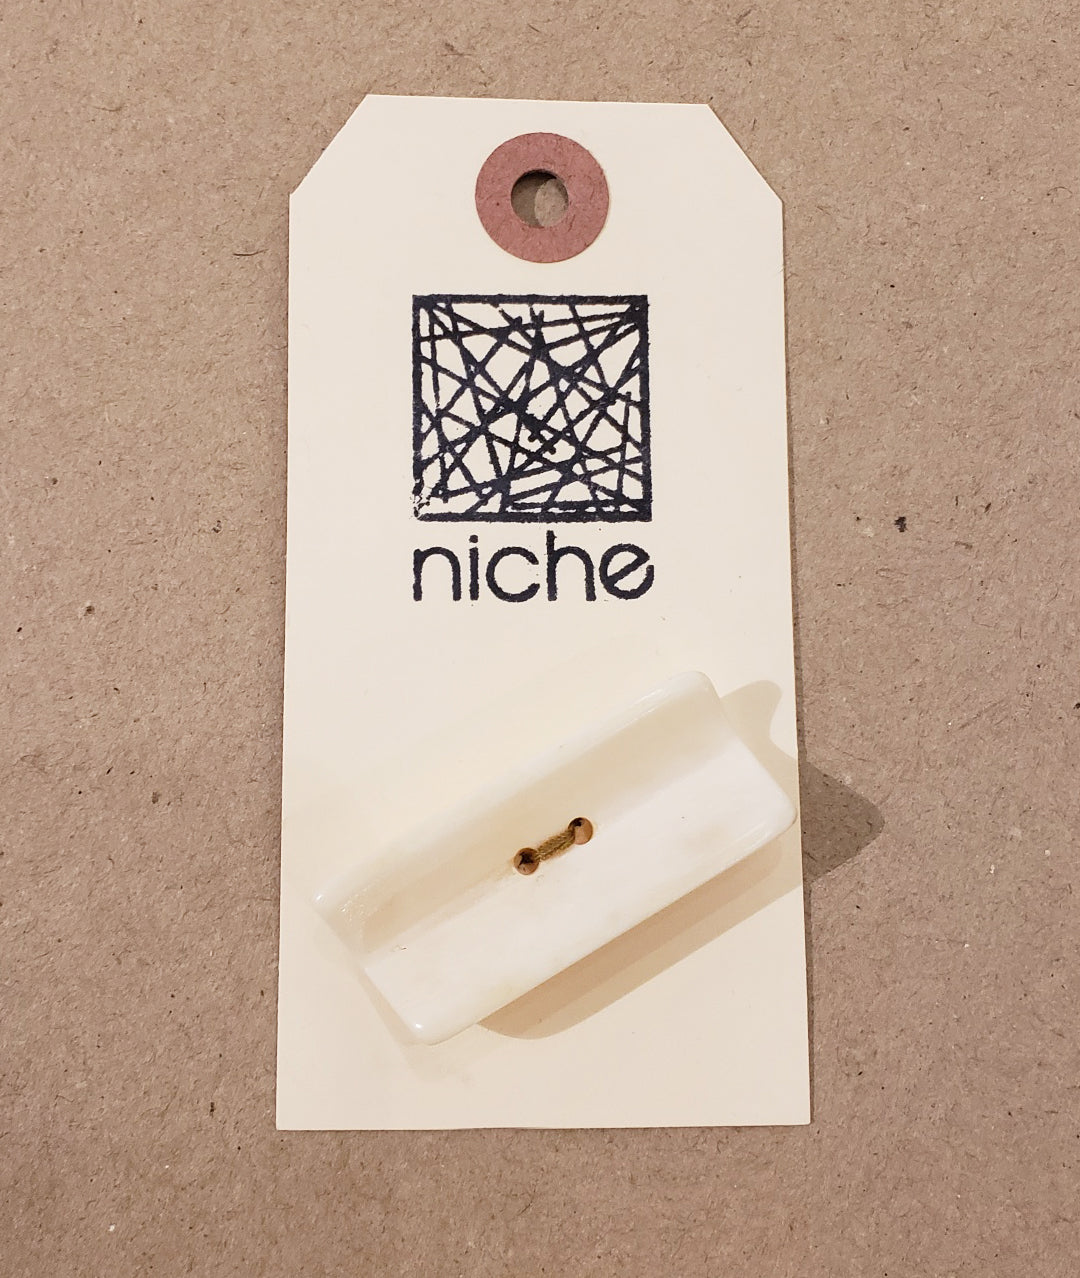 Rectangular white button on a Niche card